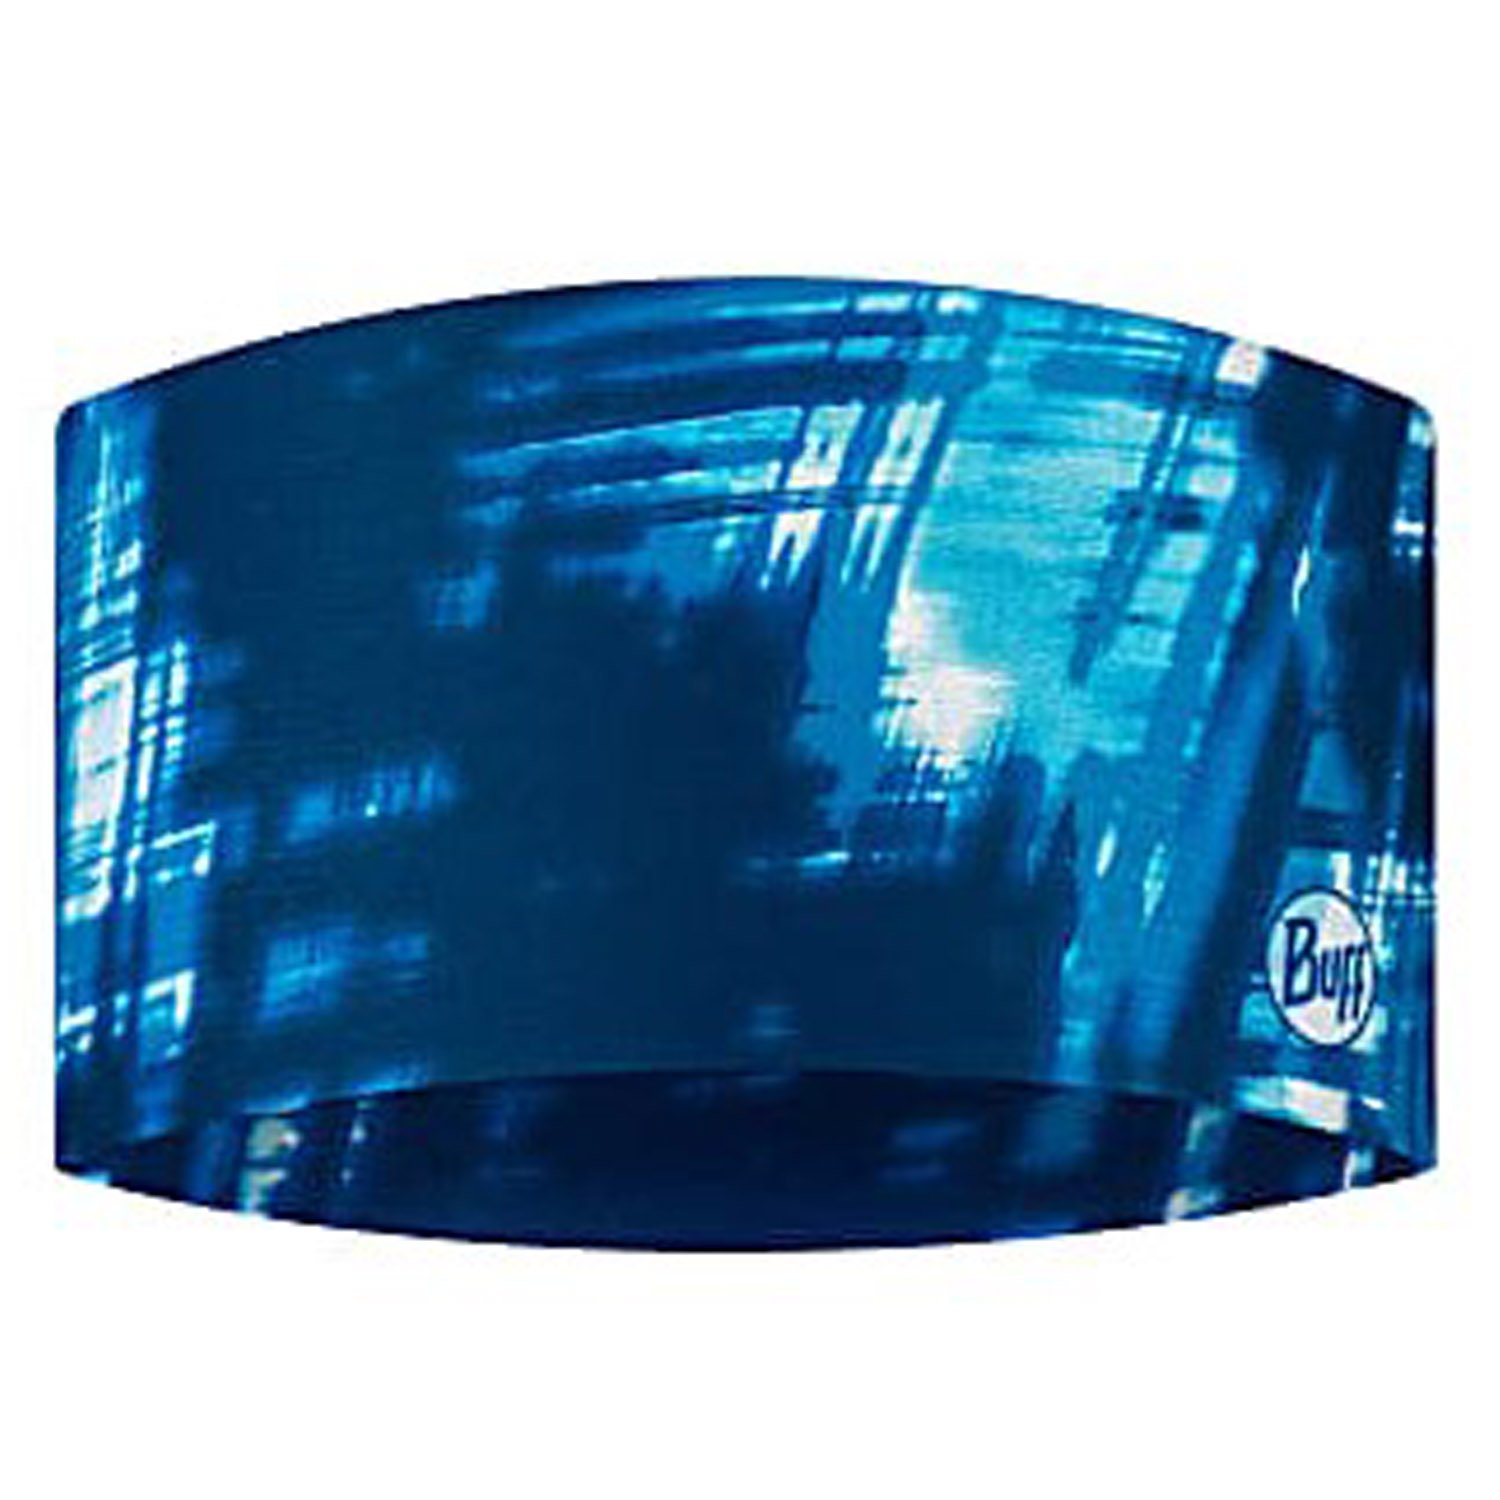 Повязка Buff Coolnet UV+ Wide Headband Attel Blue, мужская, 131415.707.10.00 повязка buff coolnet uv headband crystal multi 120876 555 10 00